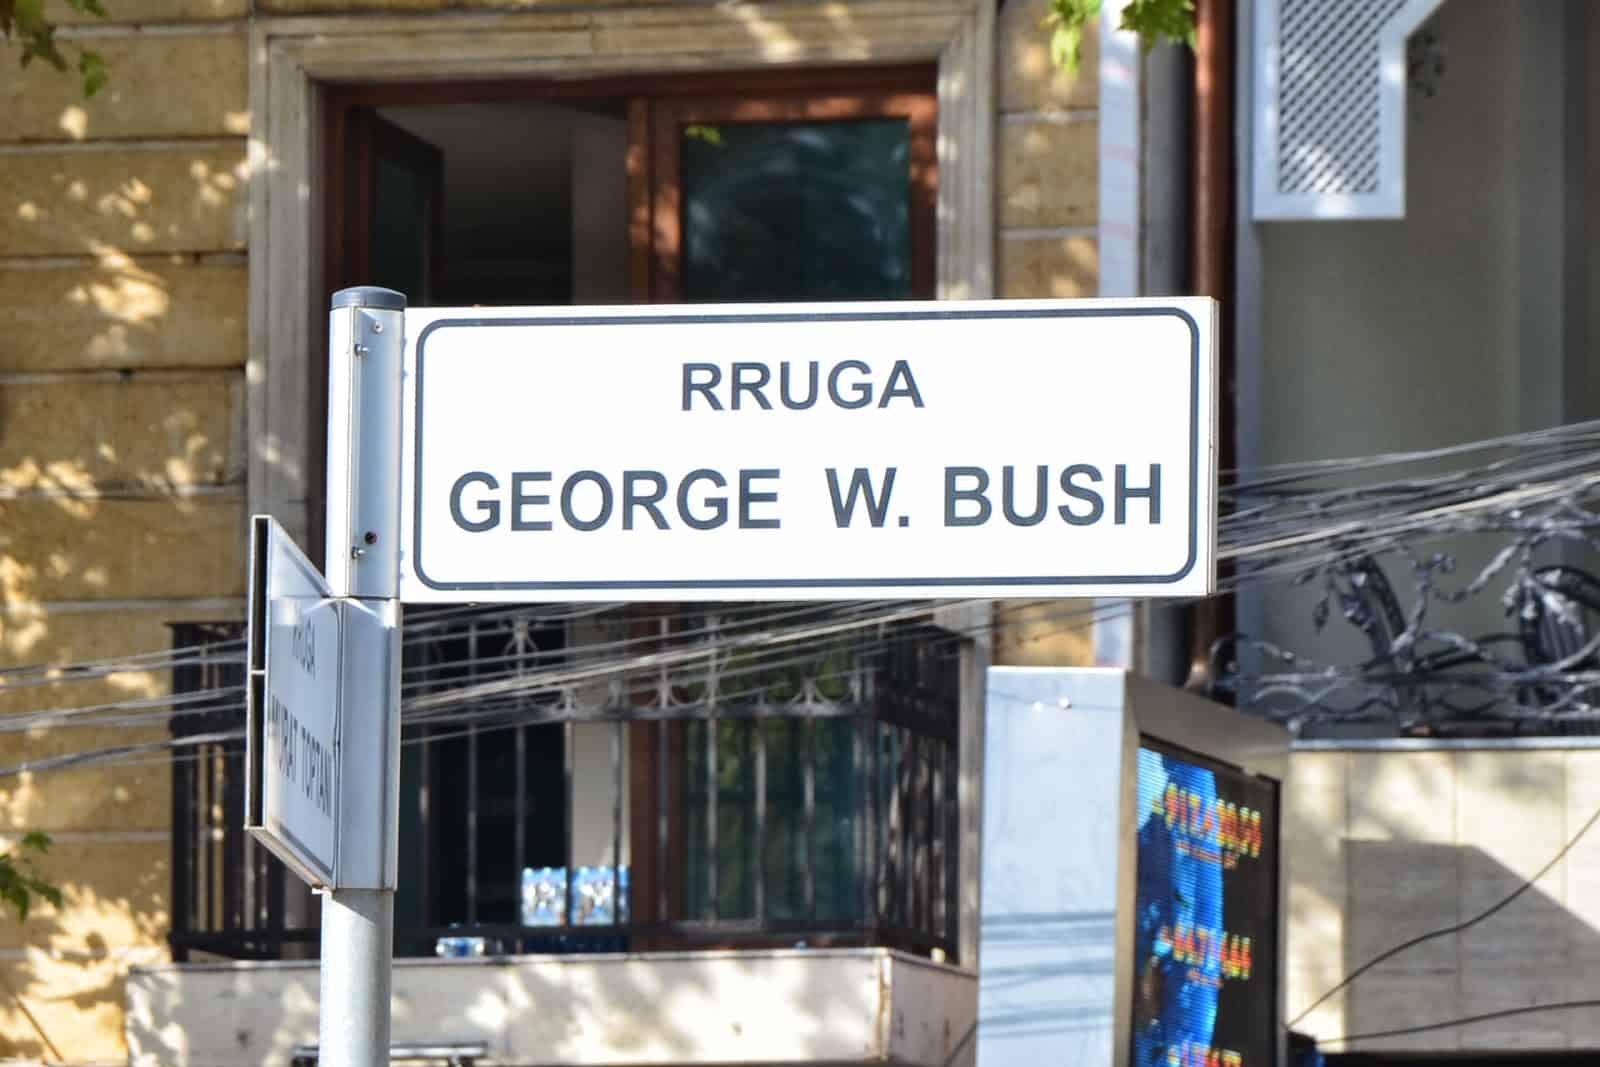 George W. Bush Street in Tiranë, Albania